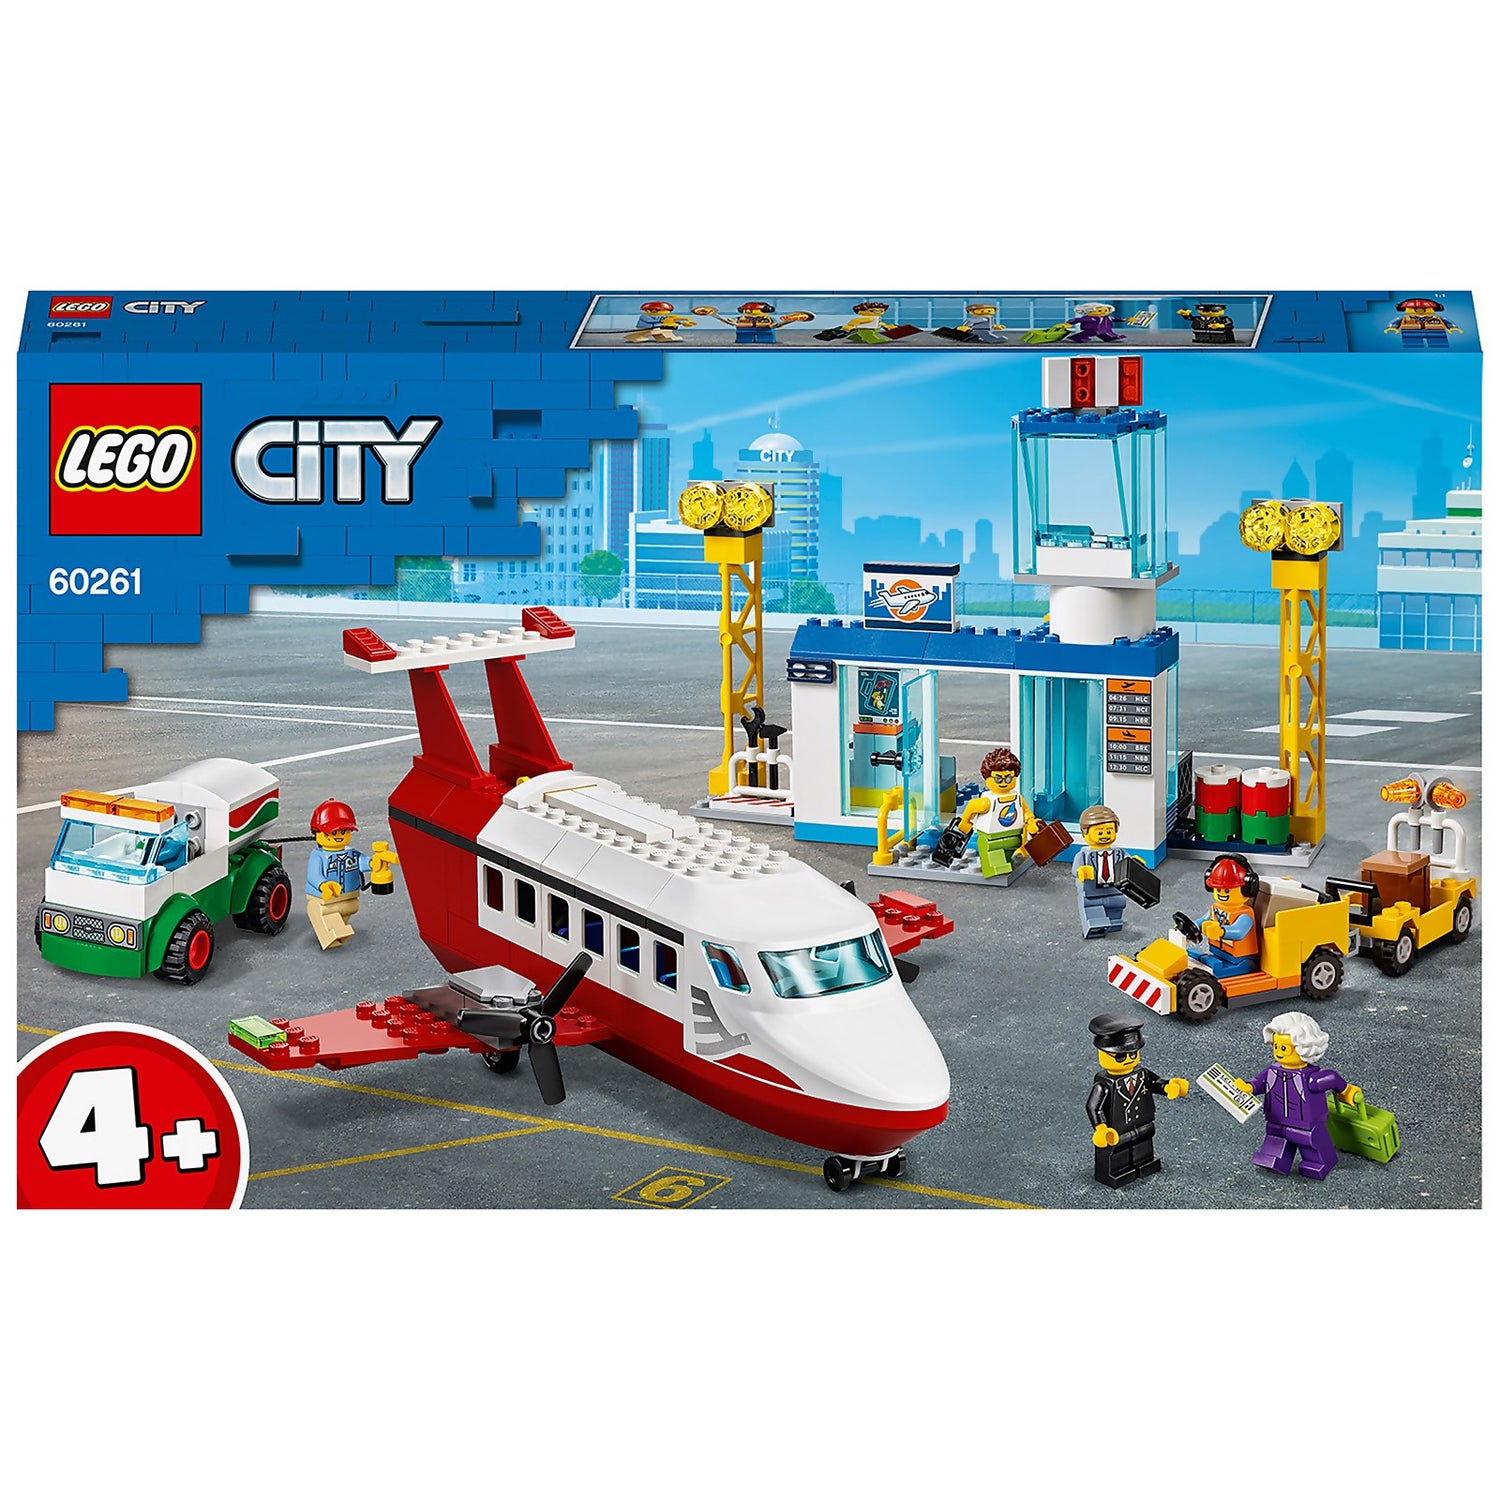 doen alsof vermomming middelen LEGO City: 4+ Central Airport Charter Plane Toy (60261) Toys - Zavvi US